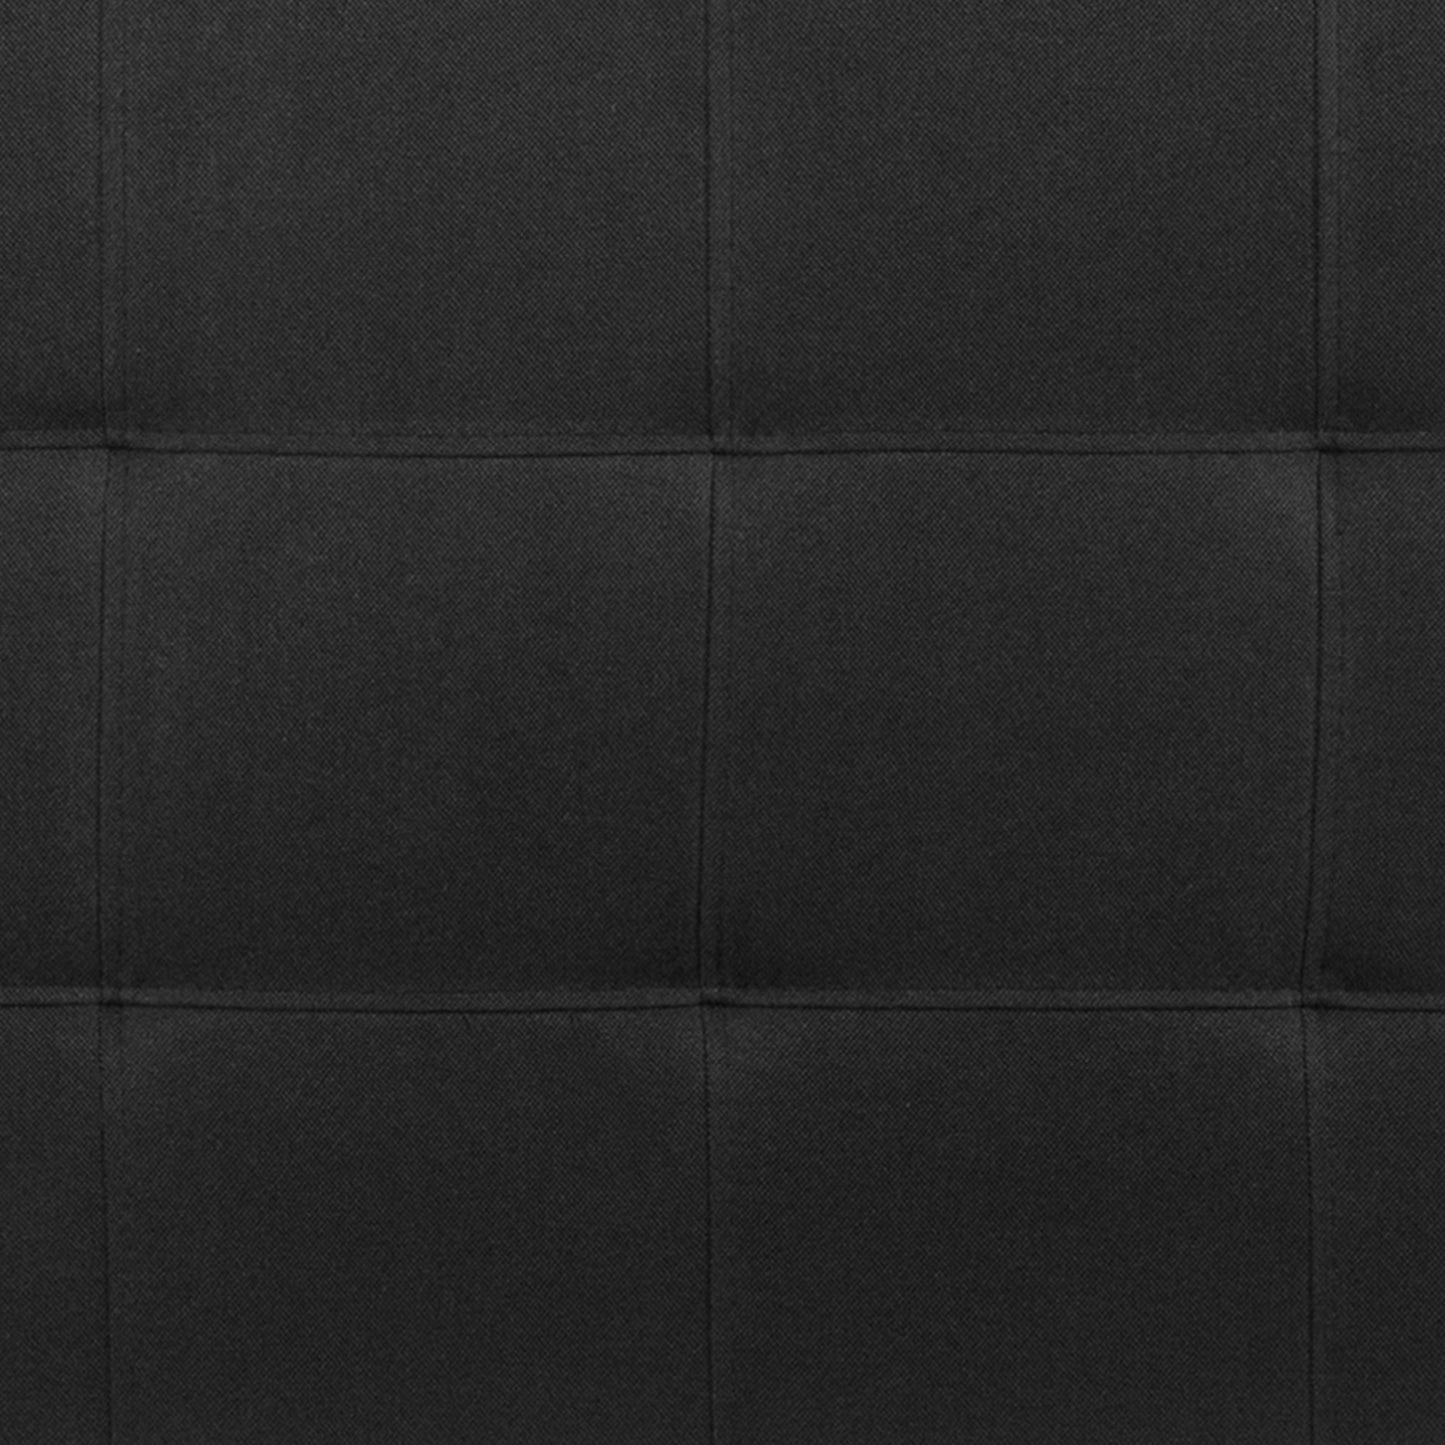 King Headboard-Black Fabric HG-HB1704-K-BK-GG